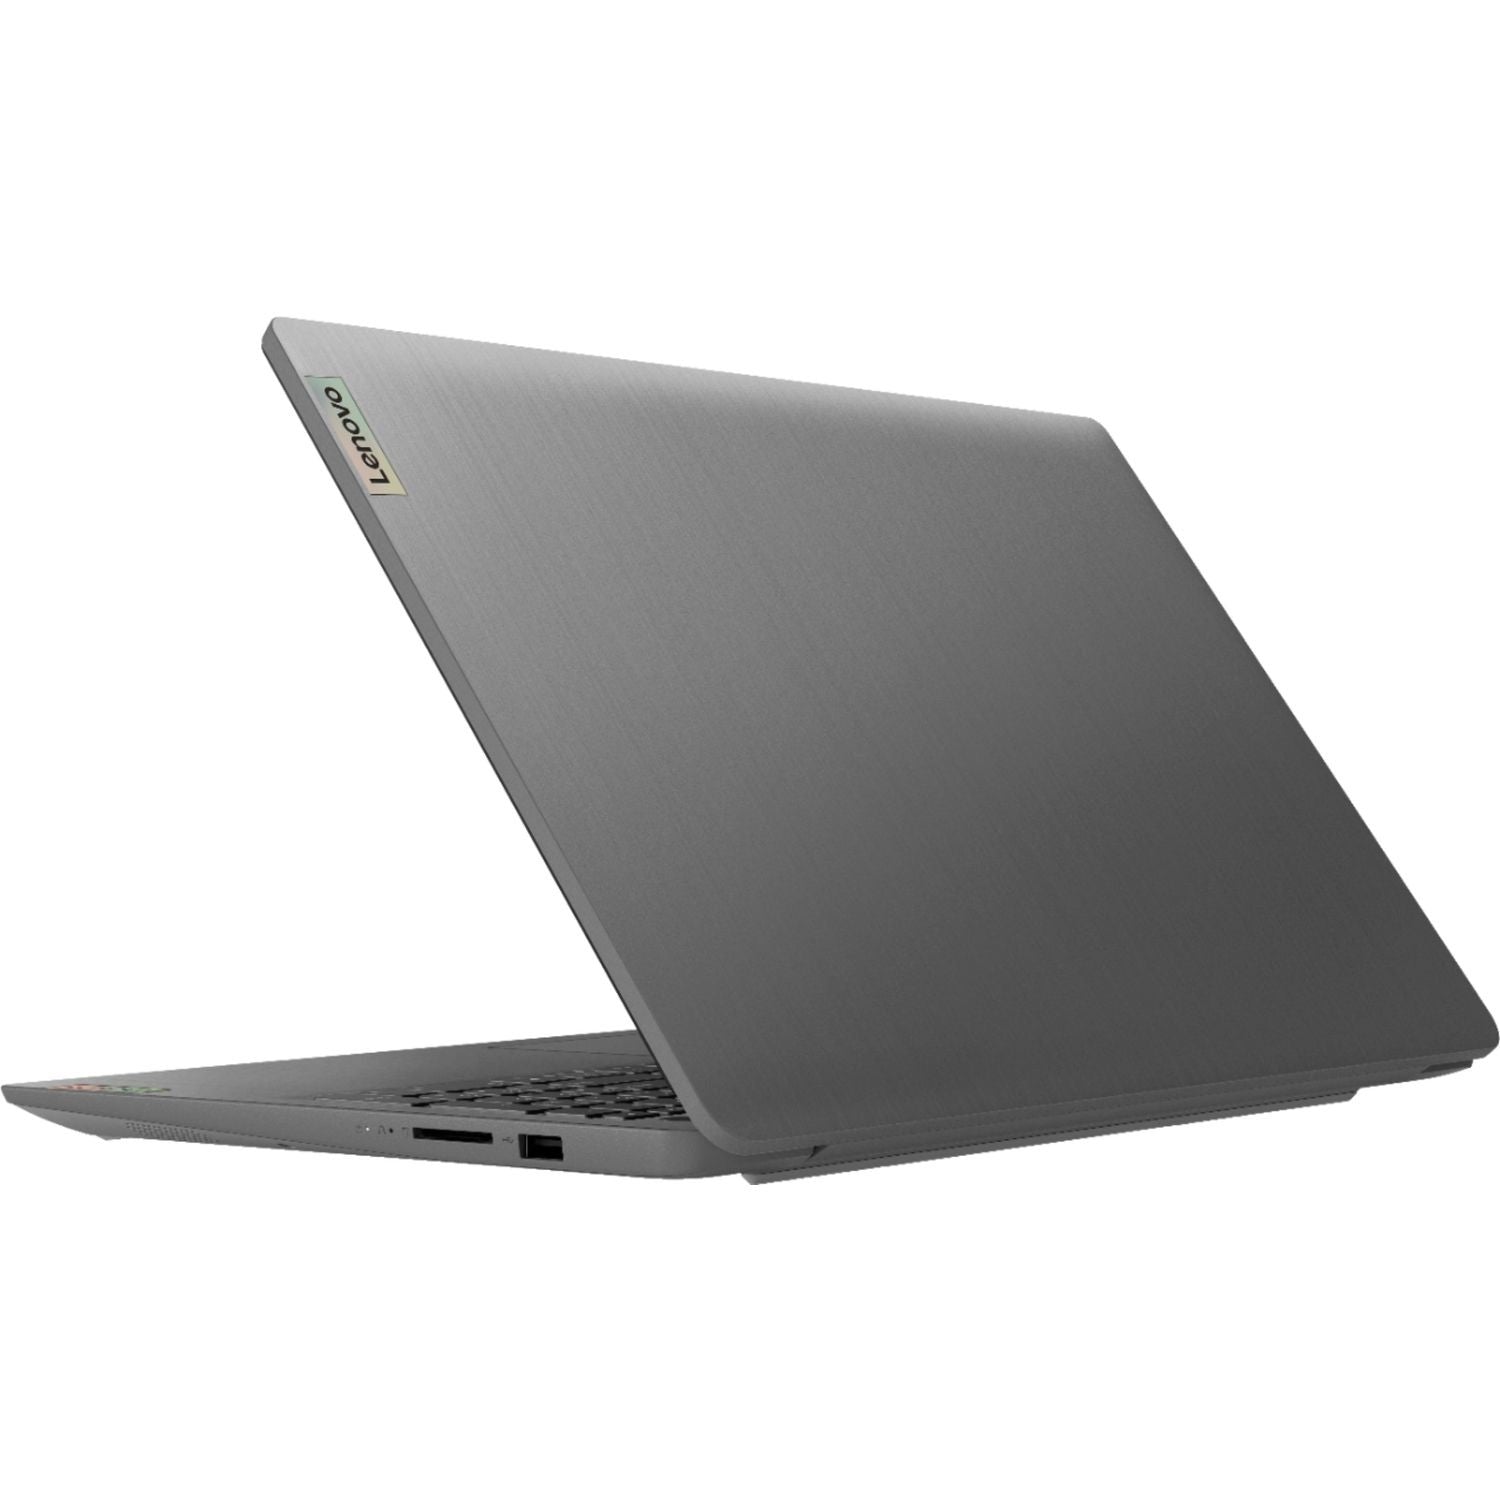 Lenovo IdeaPad 3 82H801GQUK Laptop, Intel Core i3, 8GB RAM, 128GB SSD, 15.6", Grey